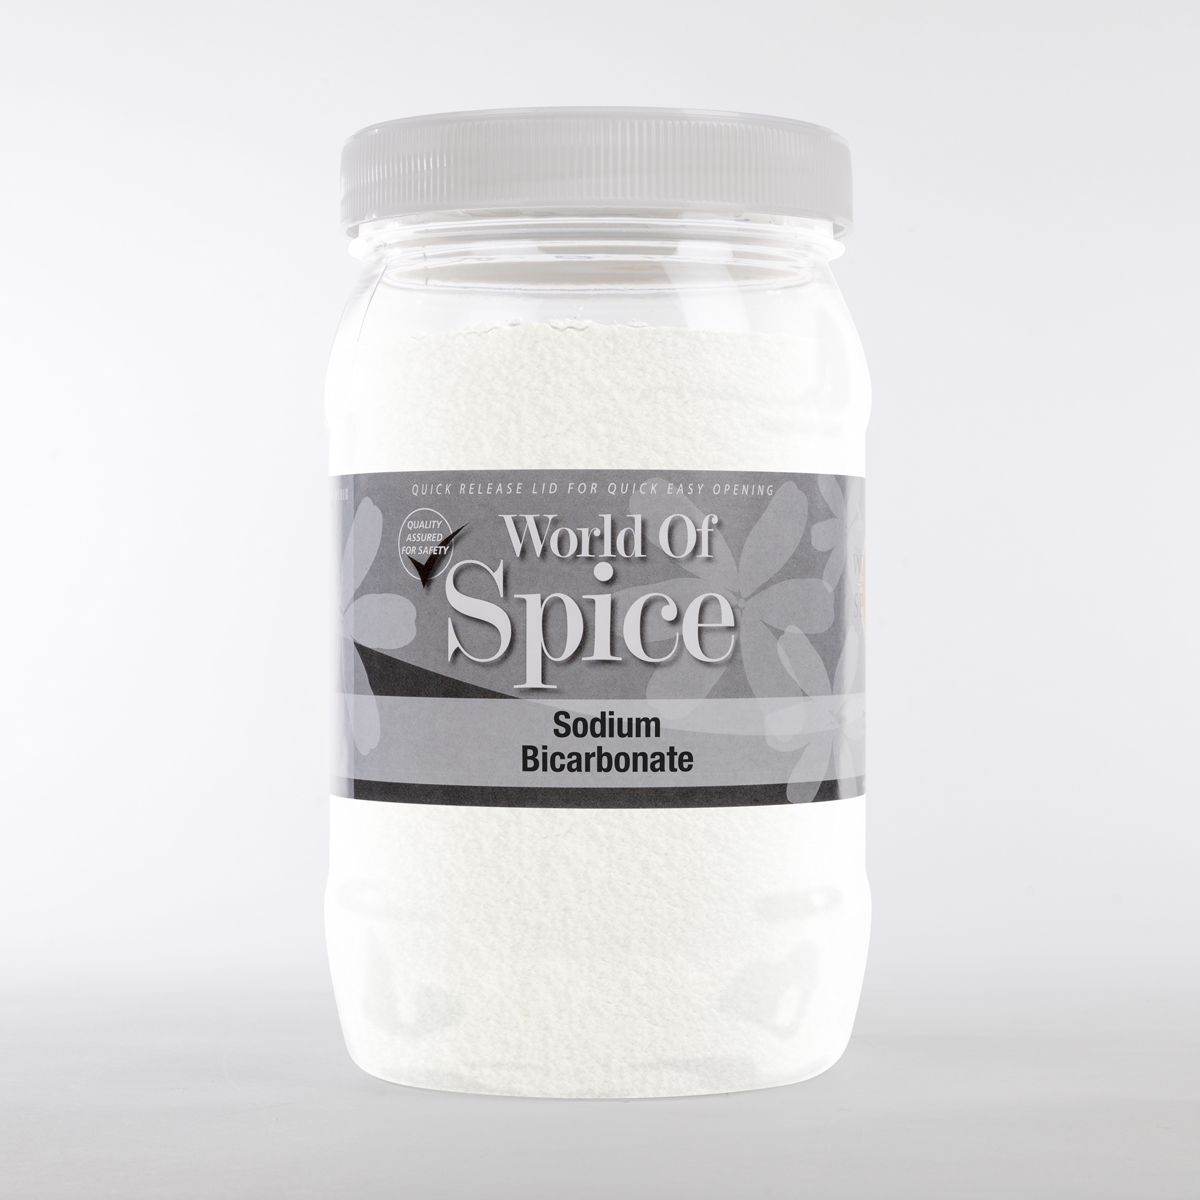 seasoning suppliers online - jar with a screw top lid of sodium bicarbonate